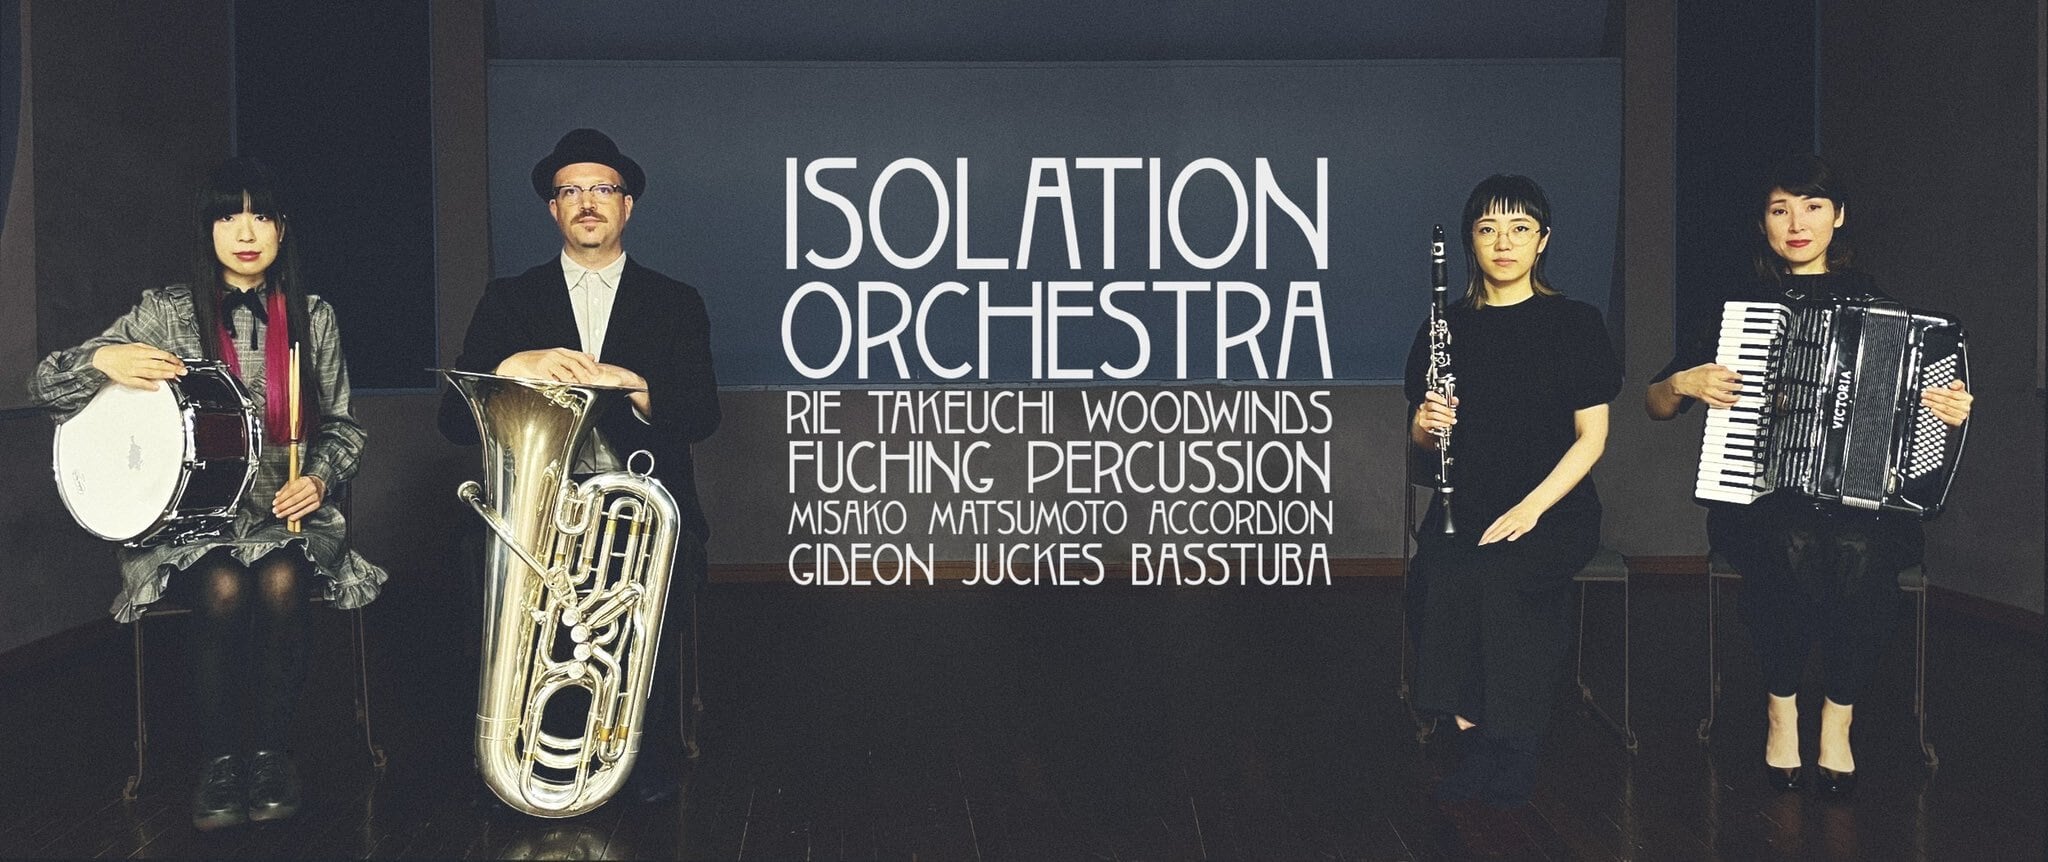 Isolation Orchestra